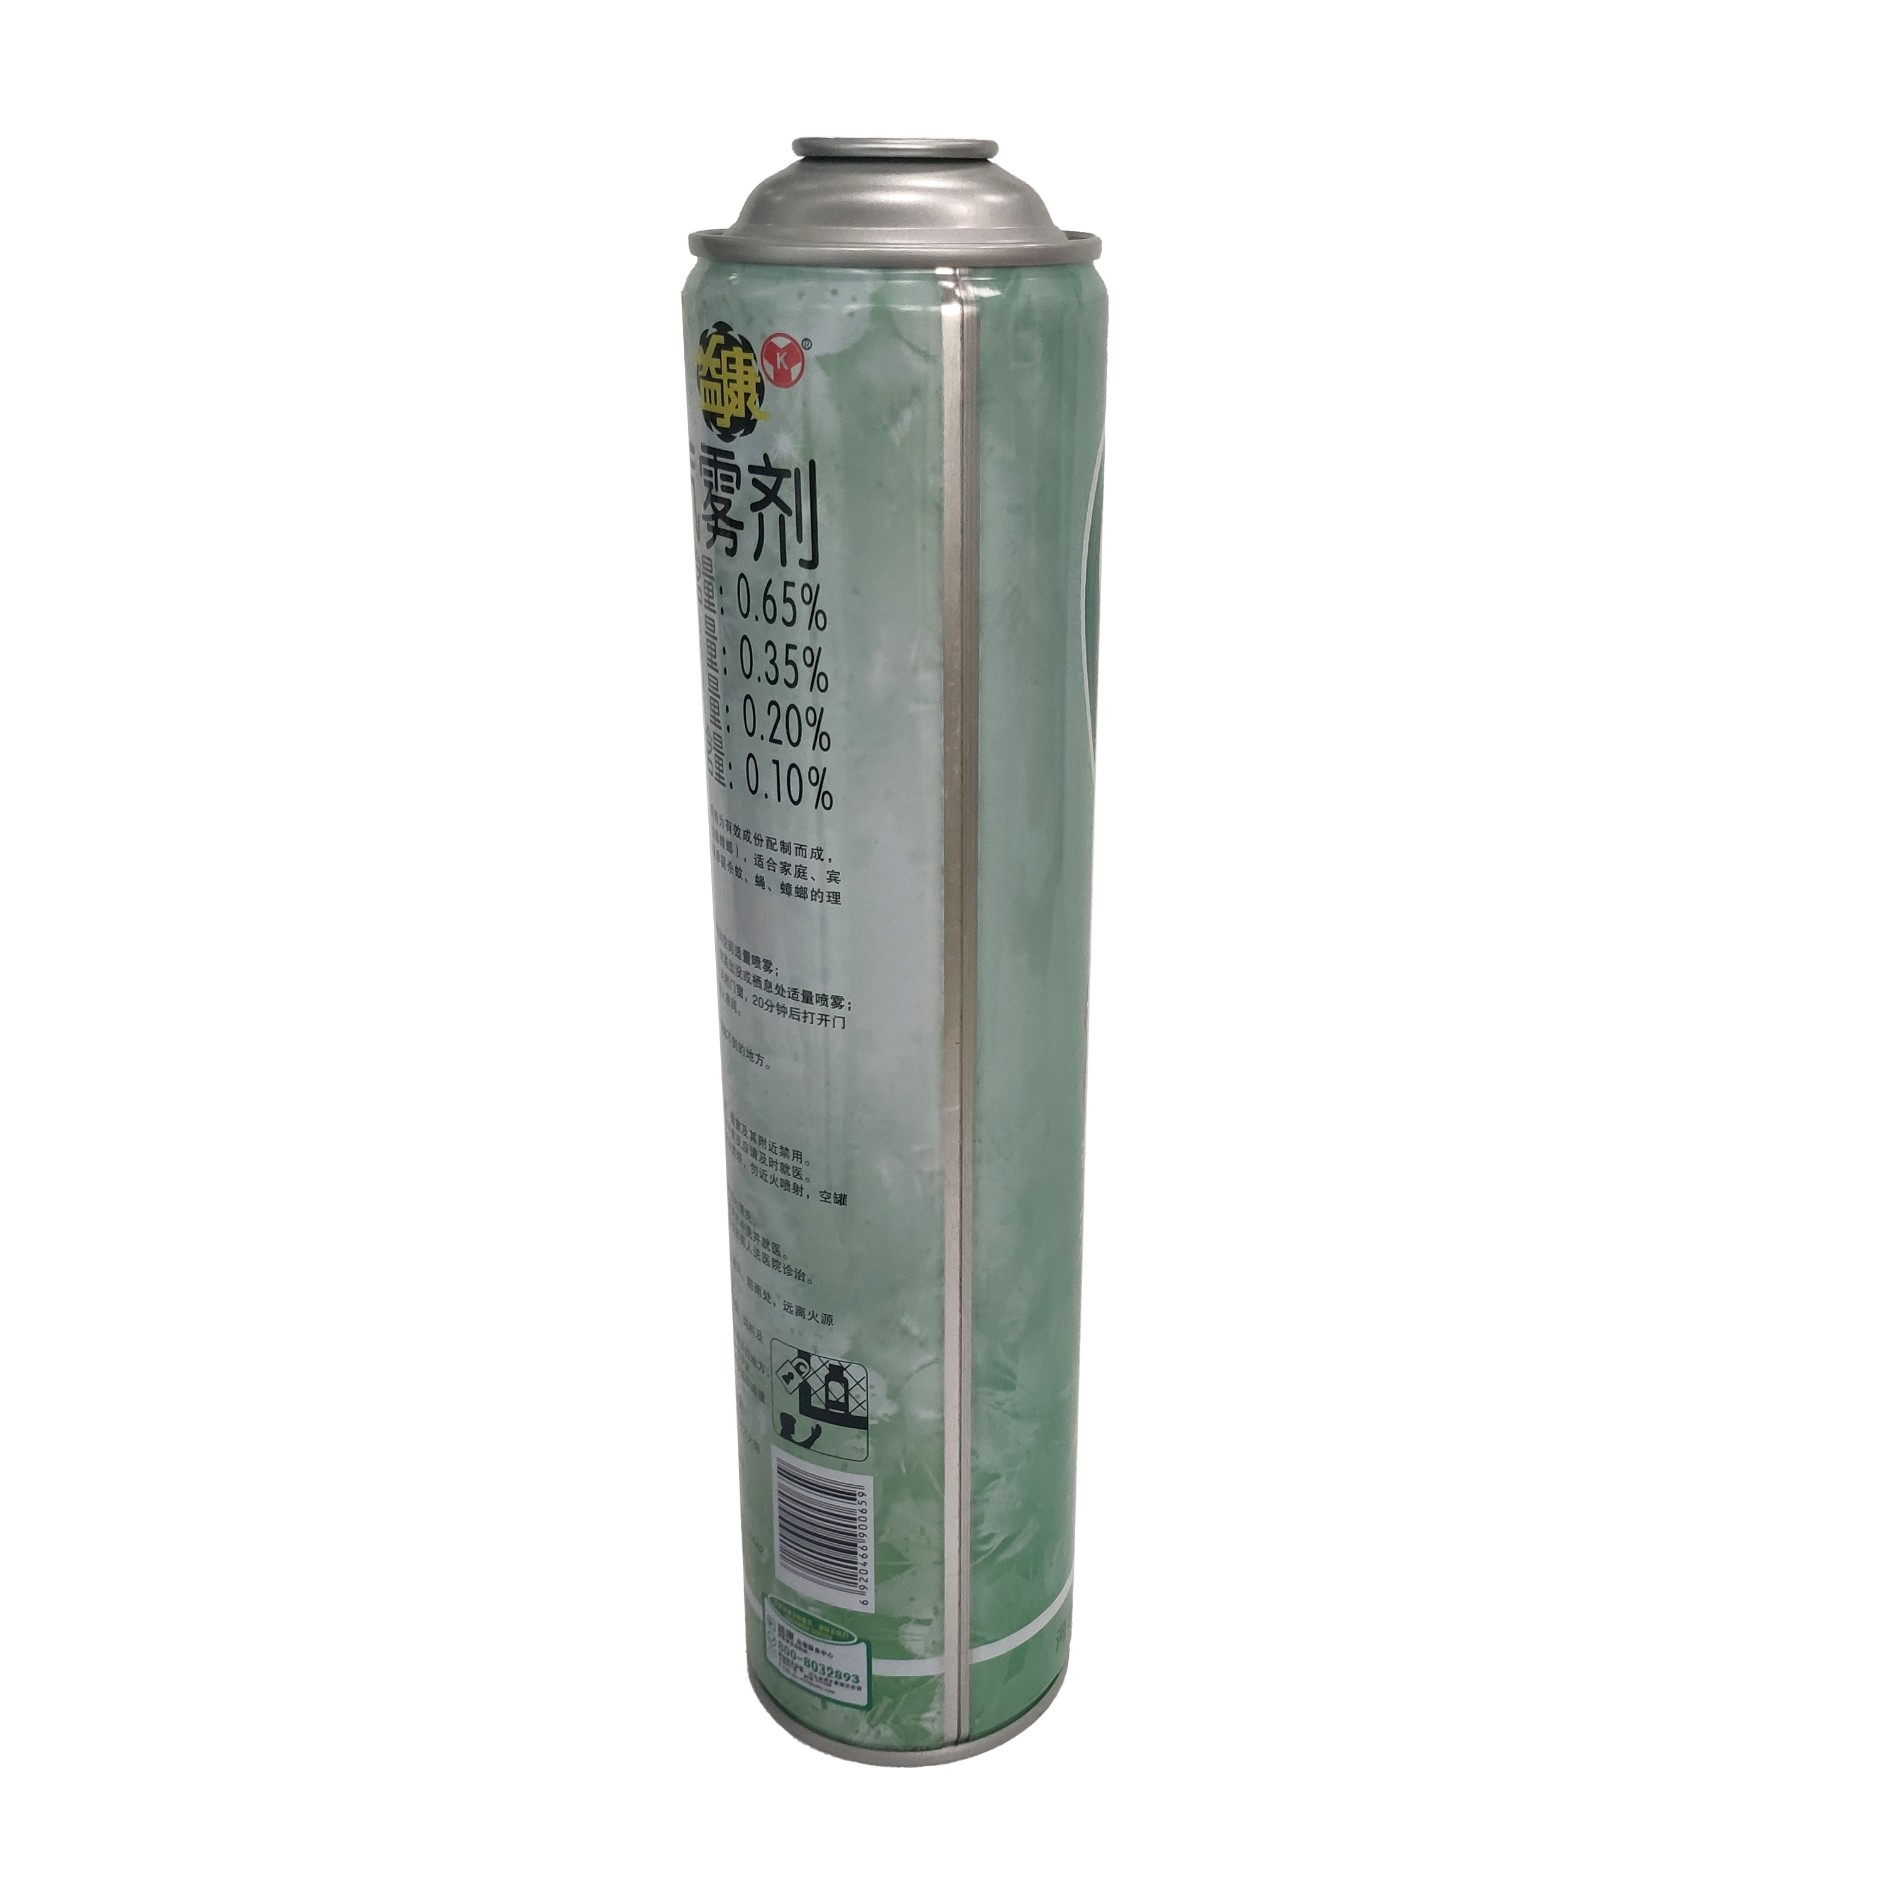 750ML Empty Insects Killer Bottle Aerosol Spray Tin Can